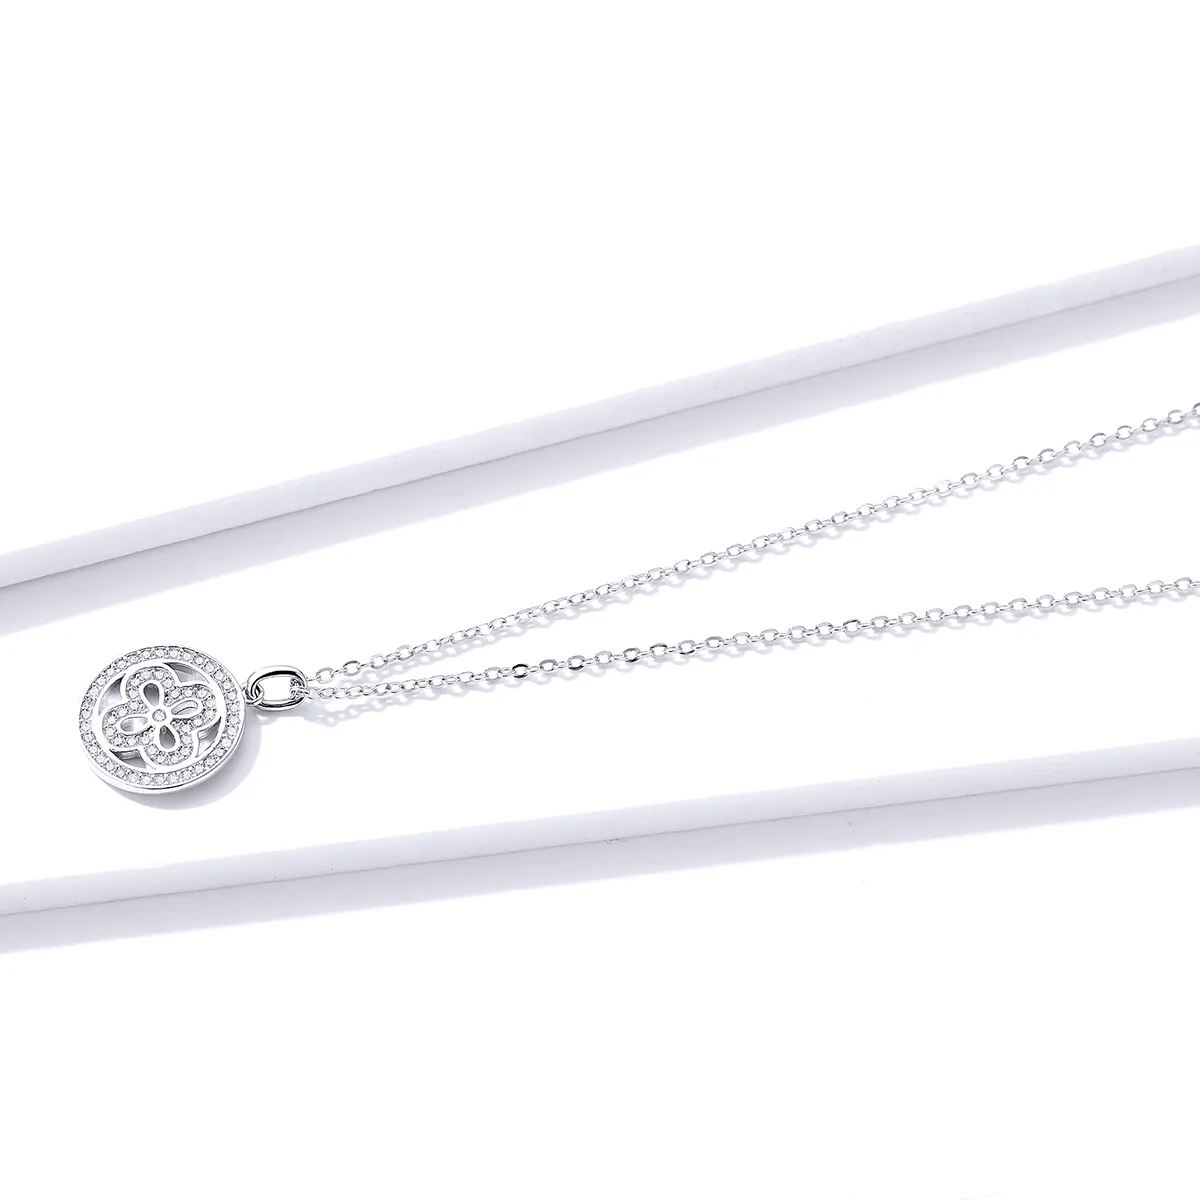 Pandora Style Four Leaf Clover Necklace - BSN142